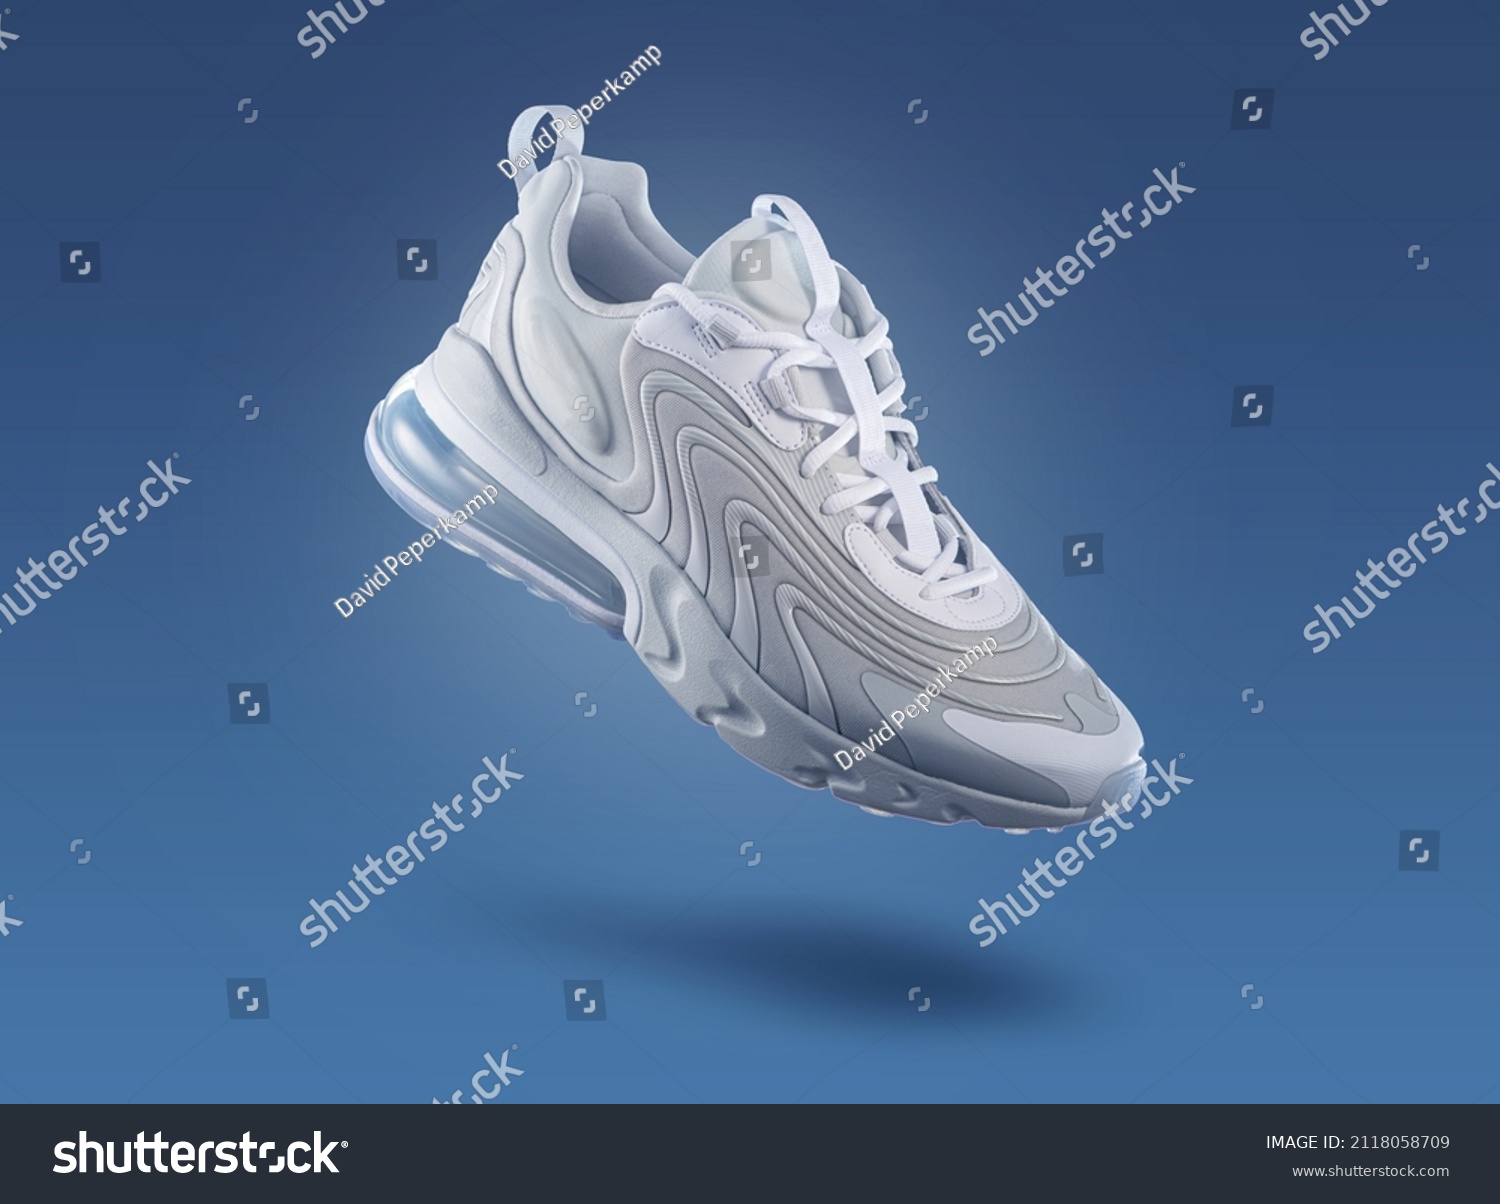 White sneaker on a blue gradient background, men's fashion, sport shoe,  air, sneakers, lifestyle, concept, product photo,  levitation concept, street wear, trainer #2118058709